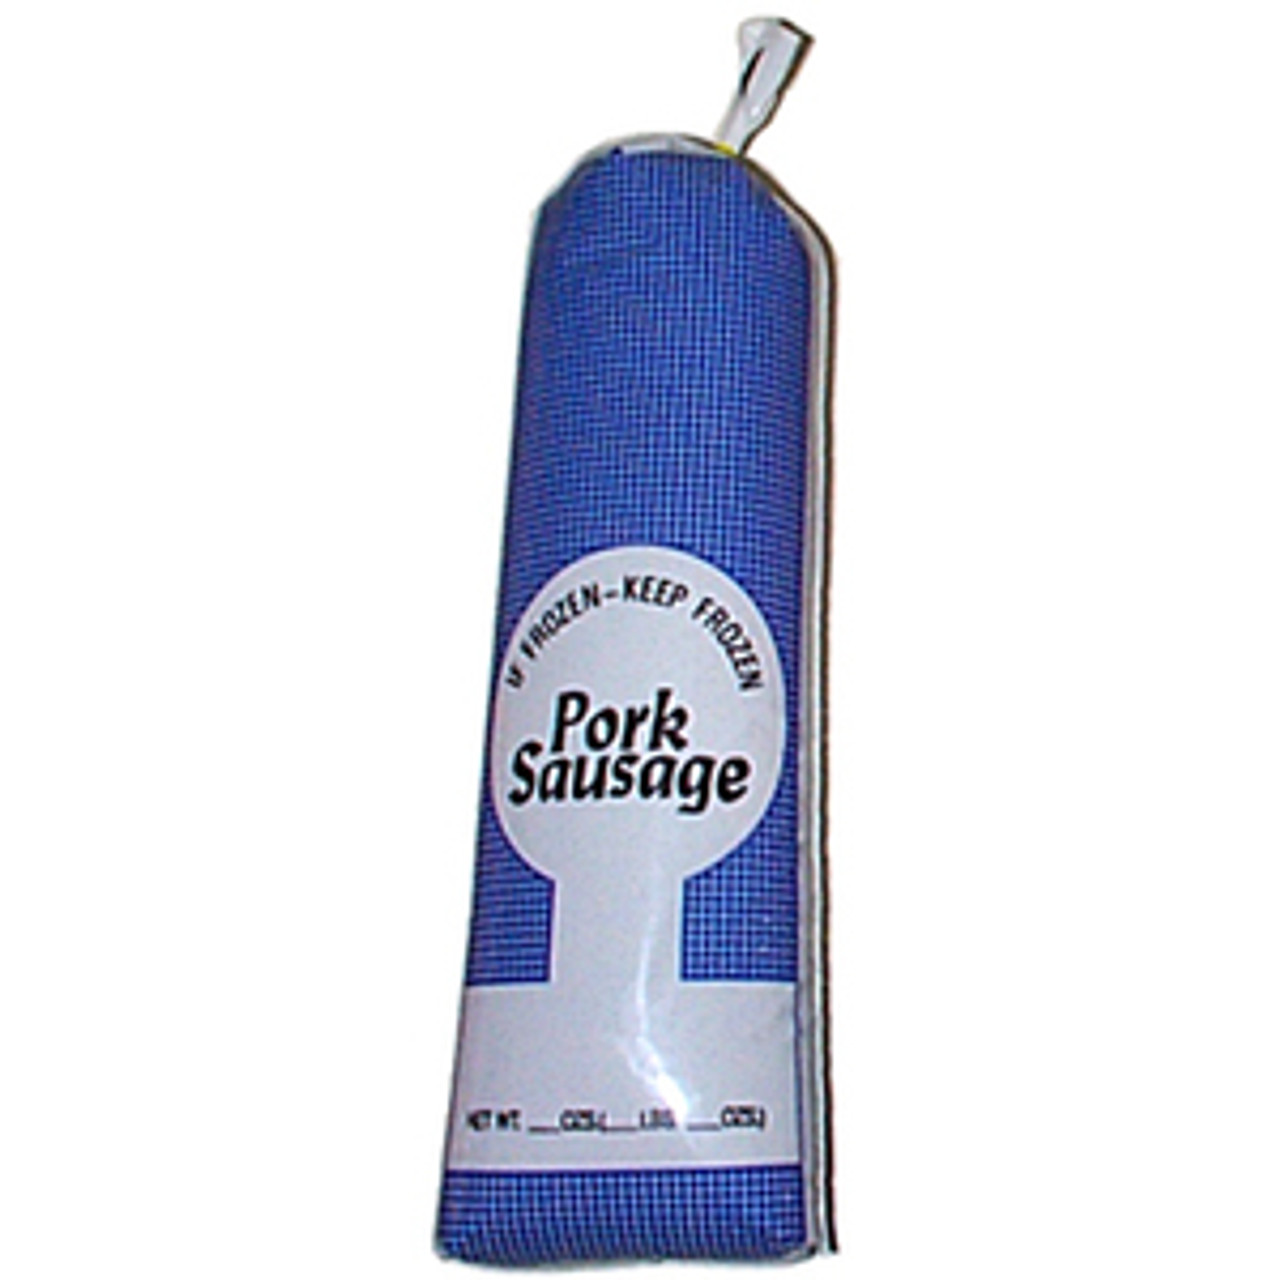 Freezer Bags - Pork Sausage - 1 Lb. Size